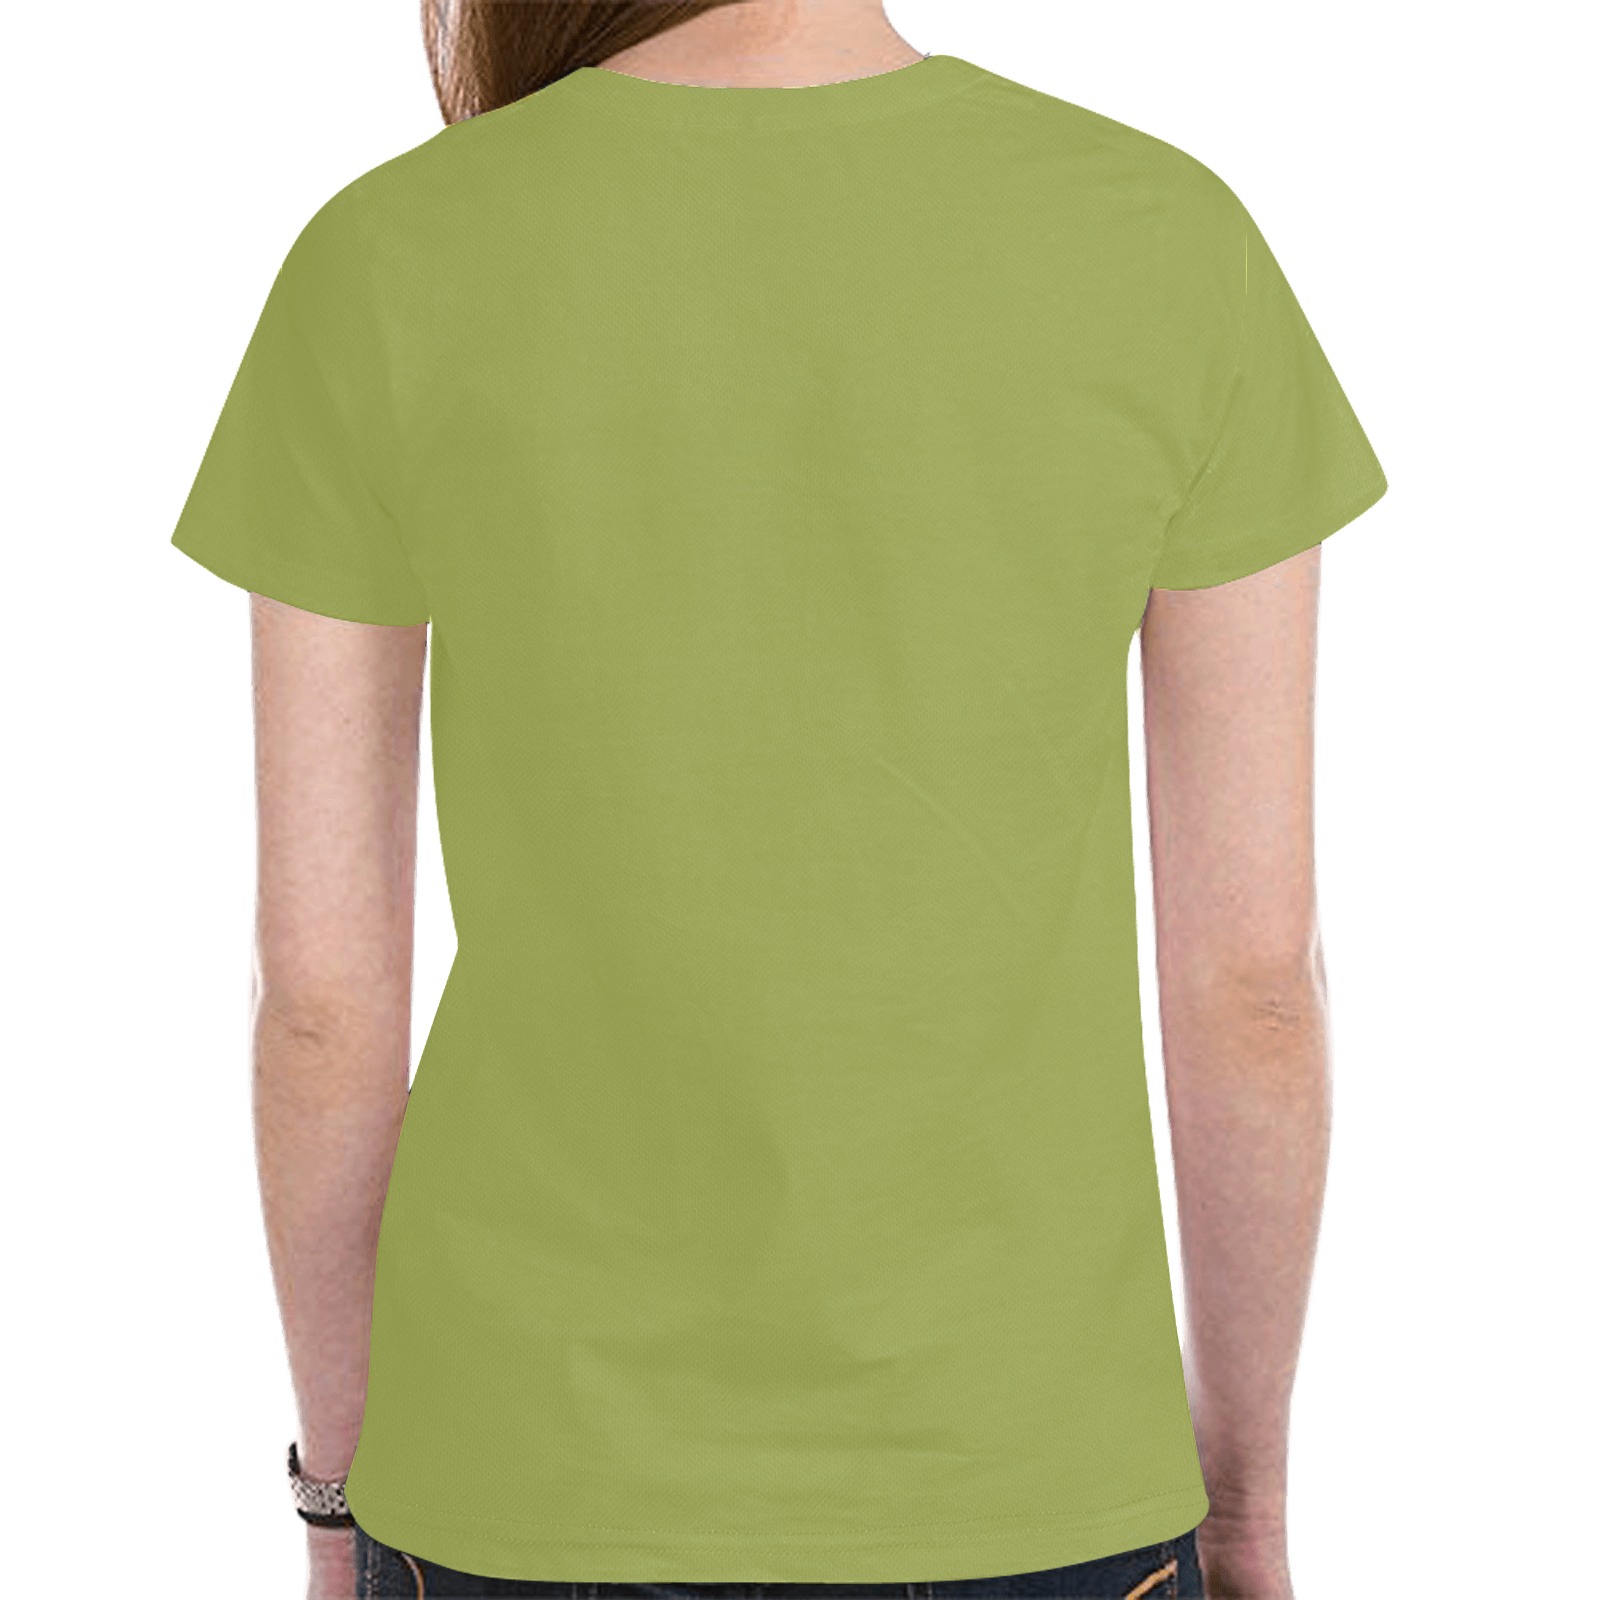 Sugar Skull Horse Pink Roses Olive Green New All Over Print T-shirt for Women (Model T45)